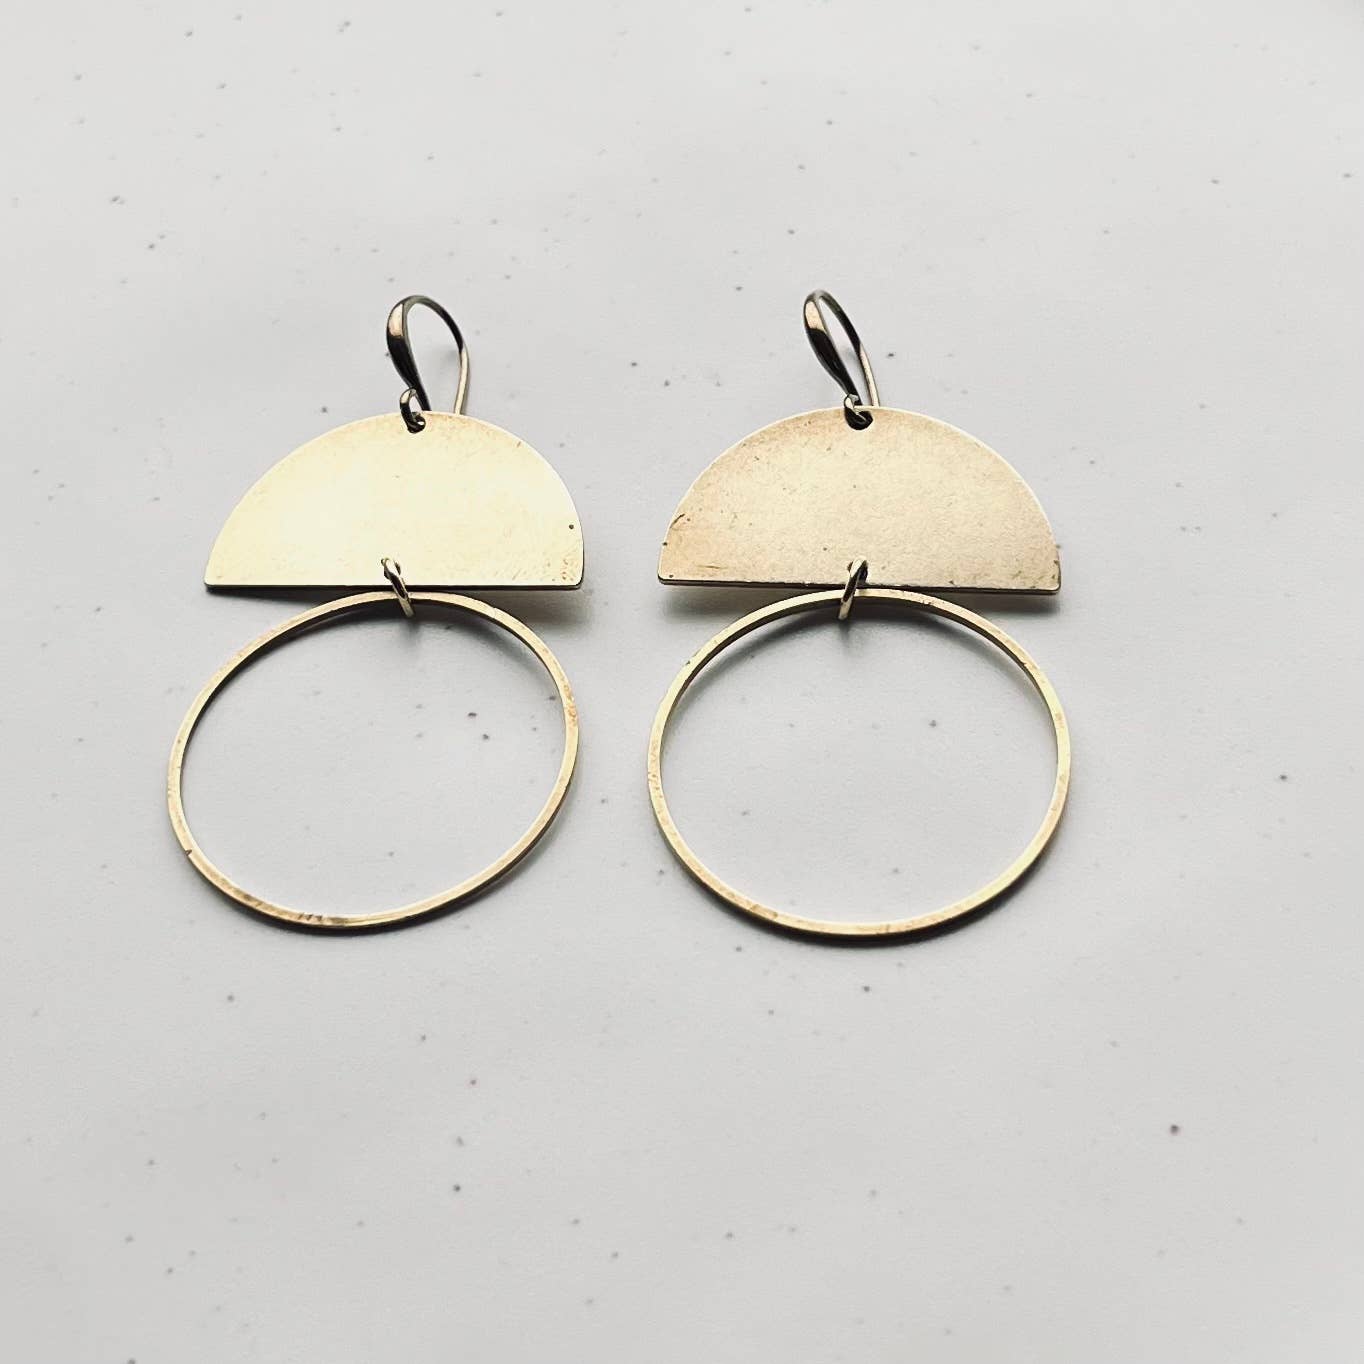 Rux Leather - Handmade brass earrings, Hoop-Half Moon